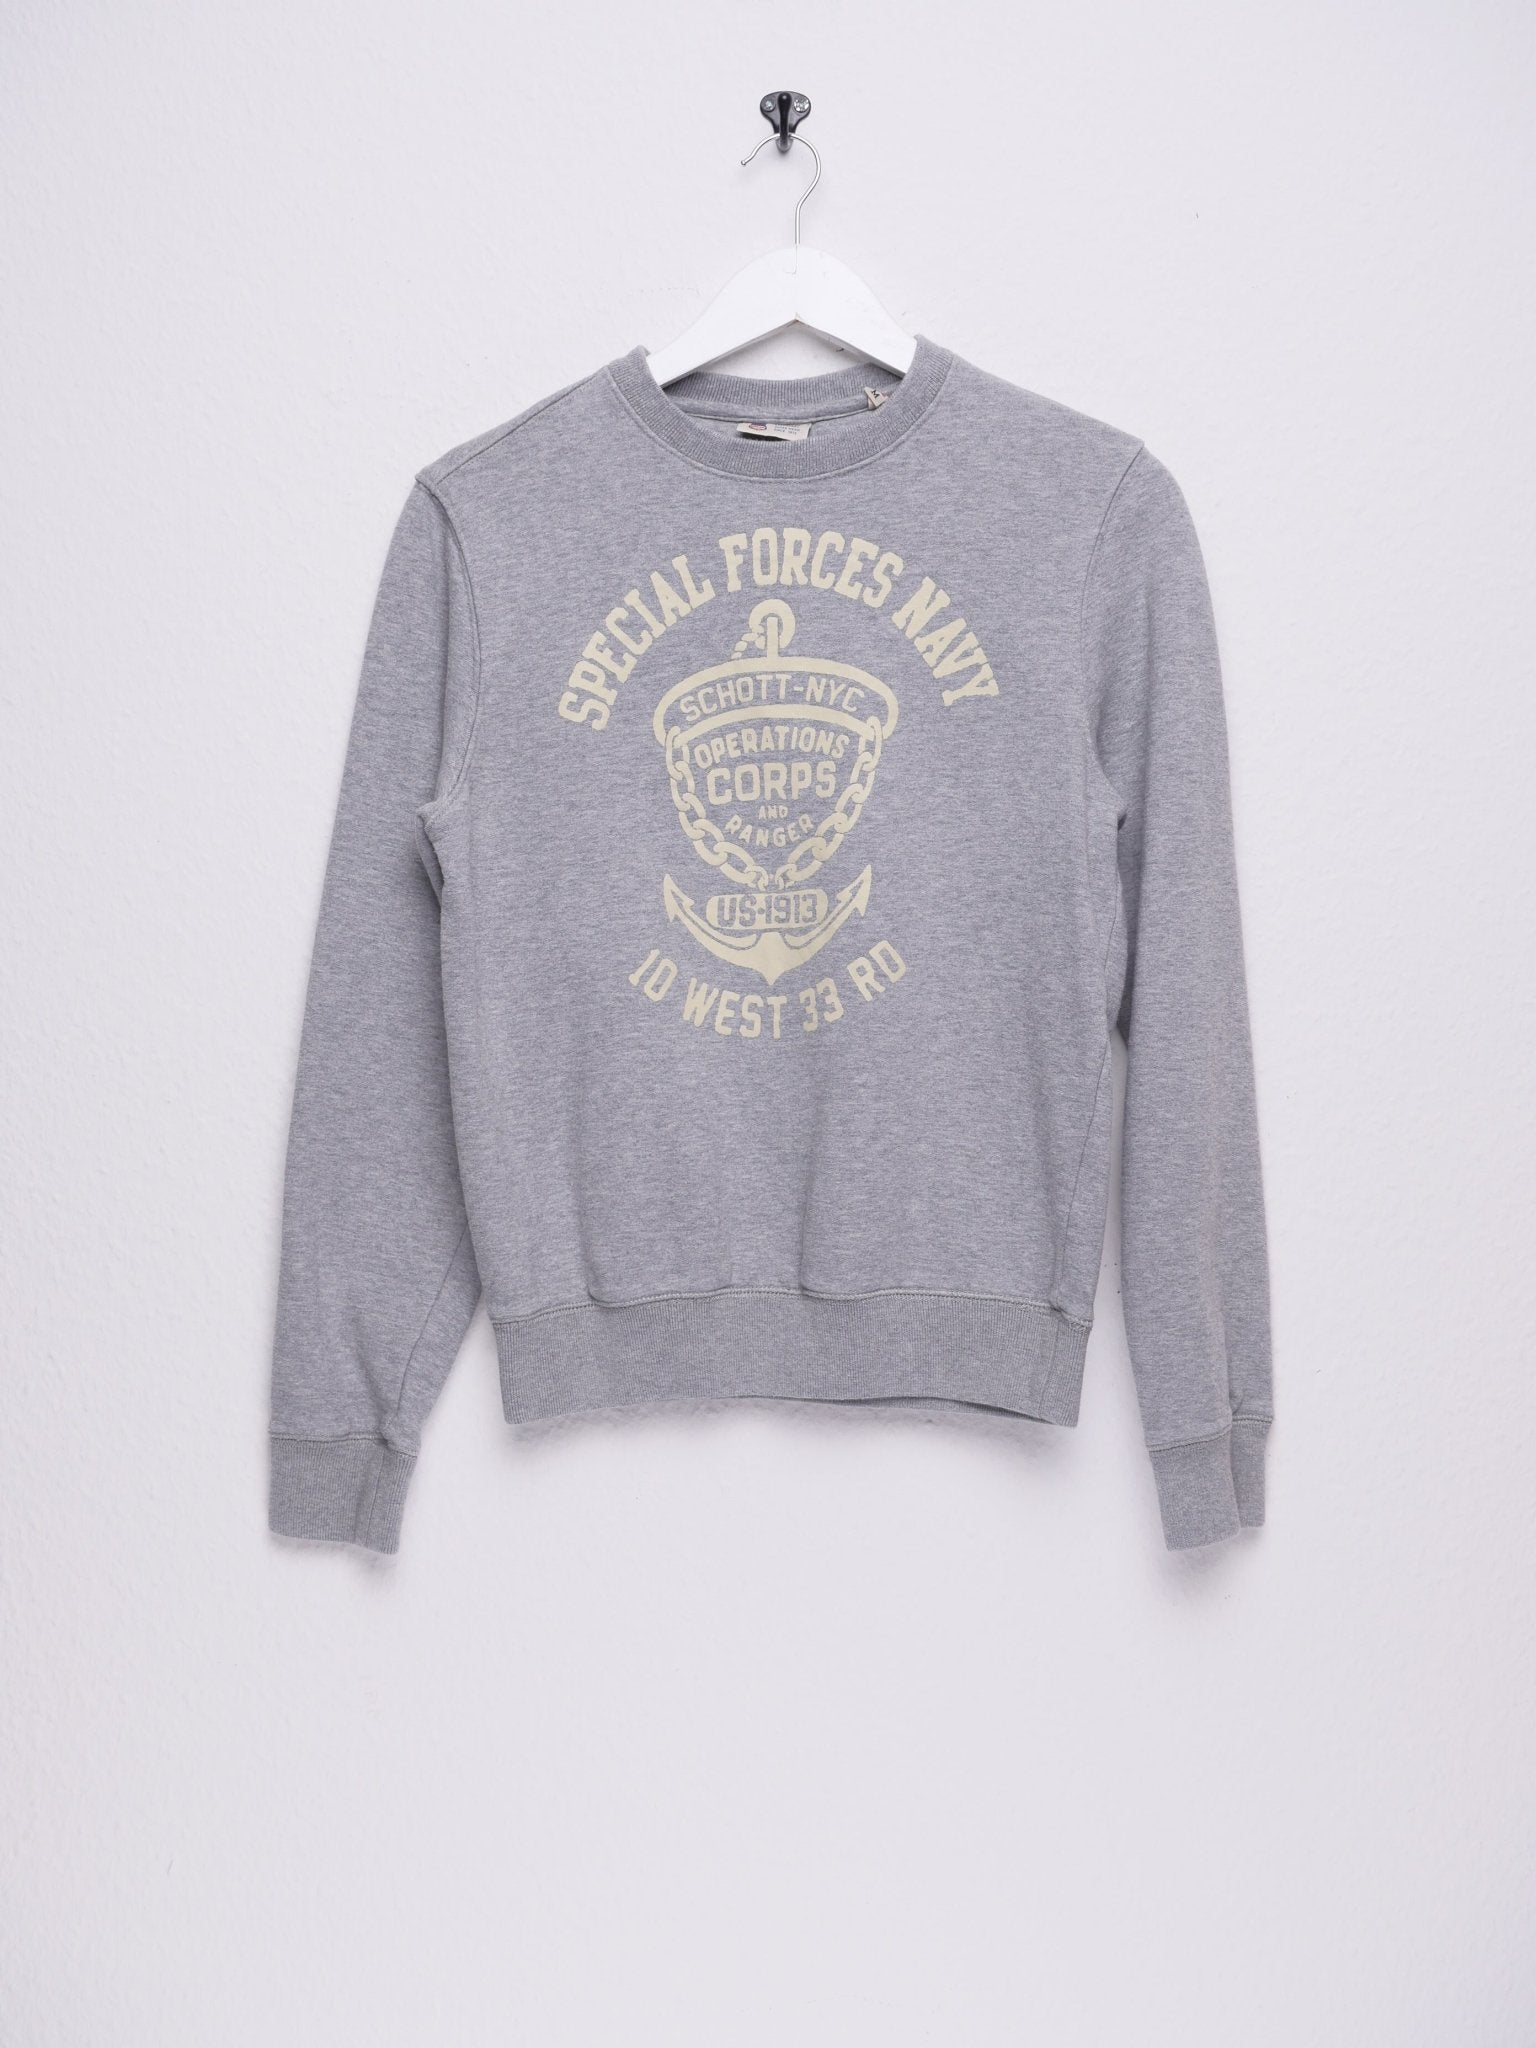 Schott printed 'Special Forces Navy' grey Sweater - Peeces